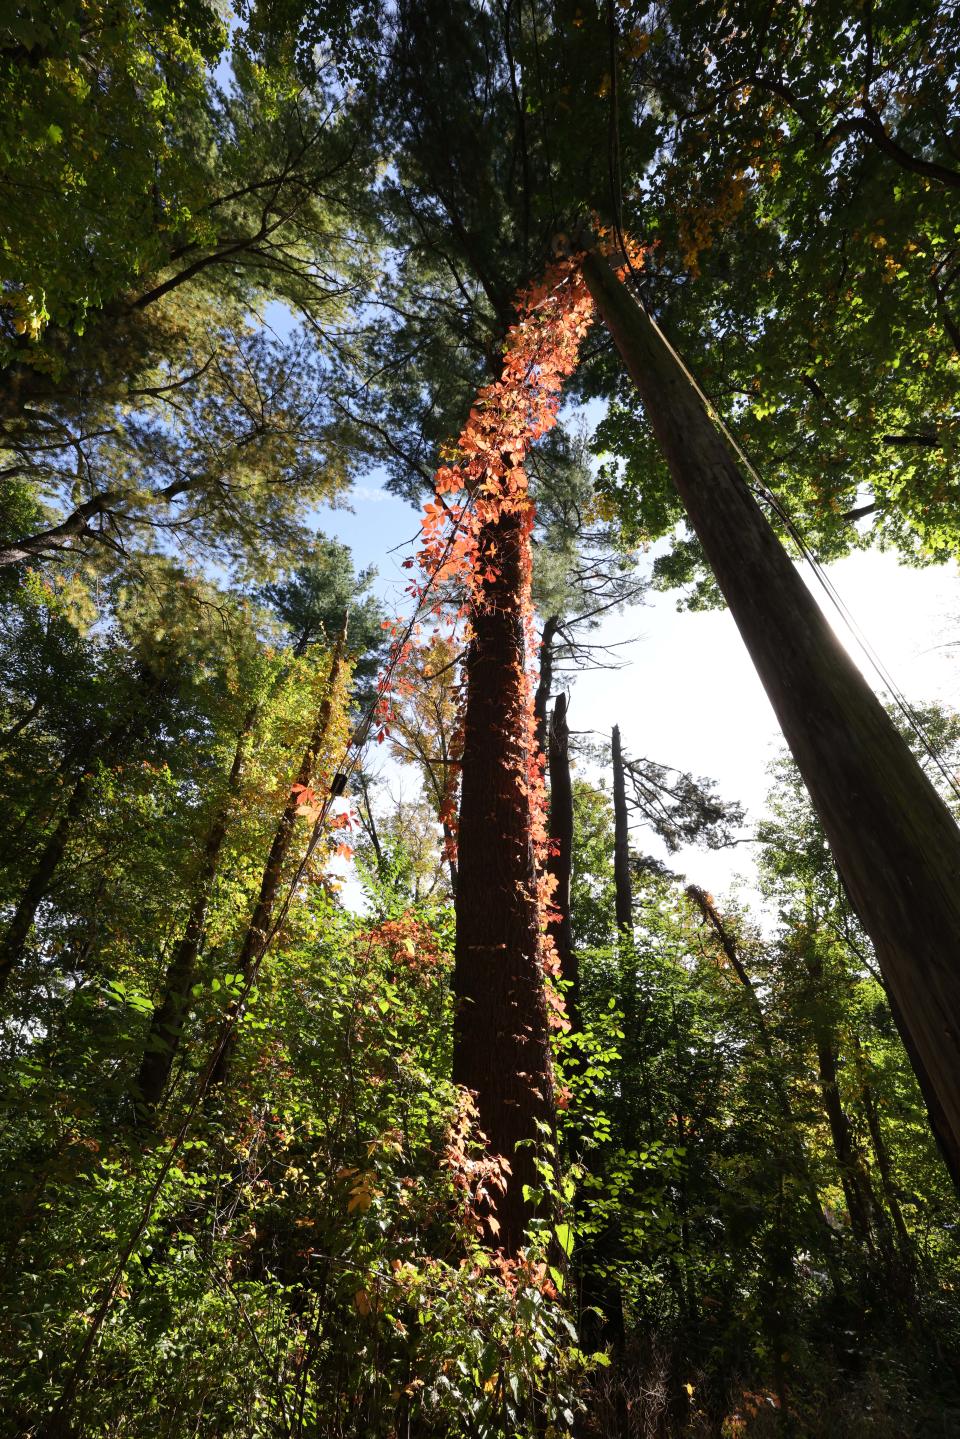 Fall foliage in the Brockton Audubon Preserve on Tuesday, Oct. 12, 2021.